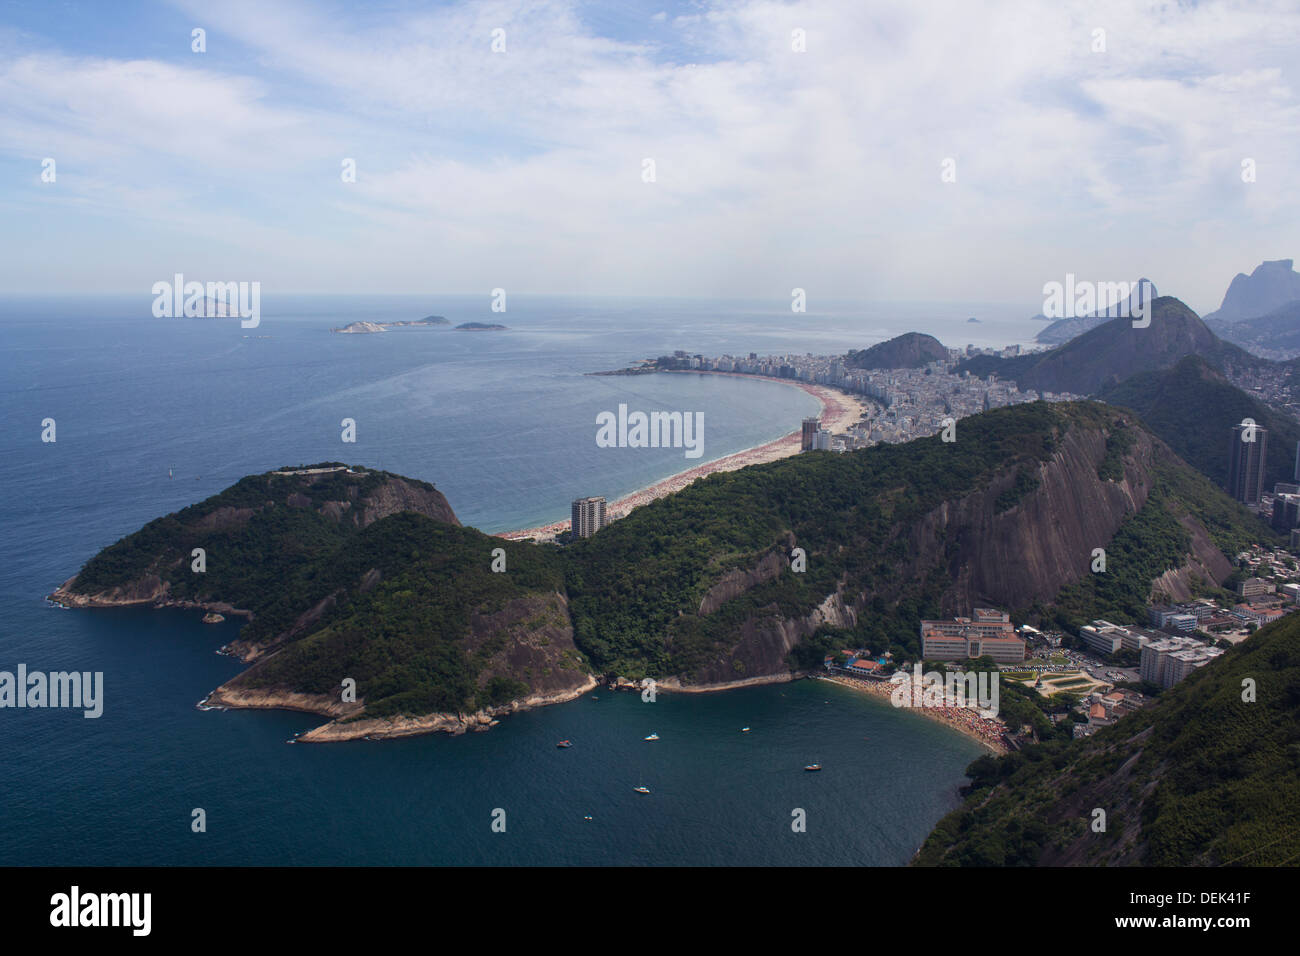 View from Sugar-loaf mountain towards Copacobana beach, Rio de Janiero, Brazil Stock Photo